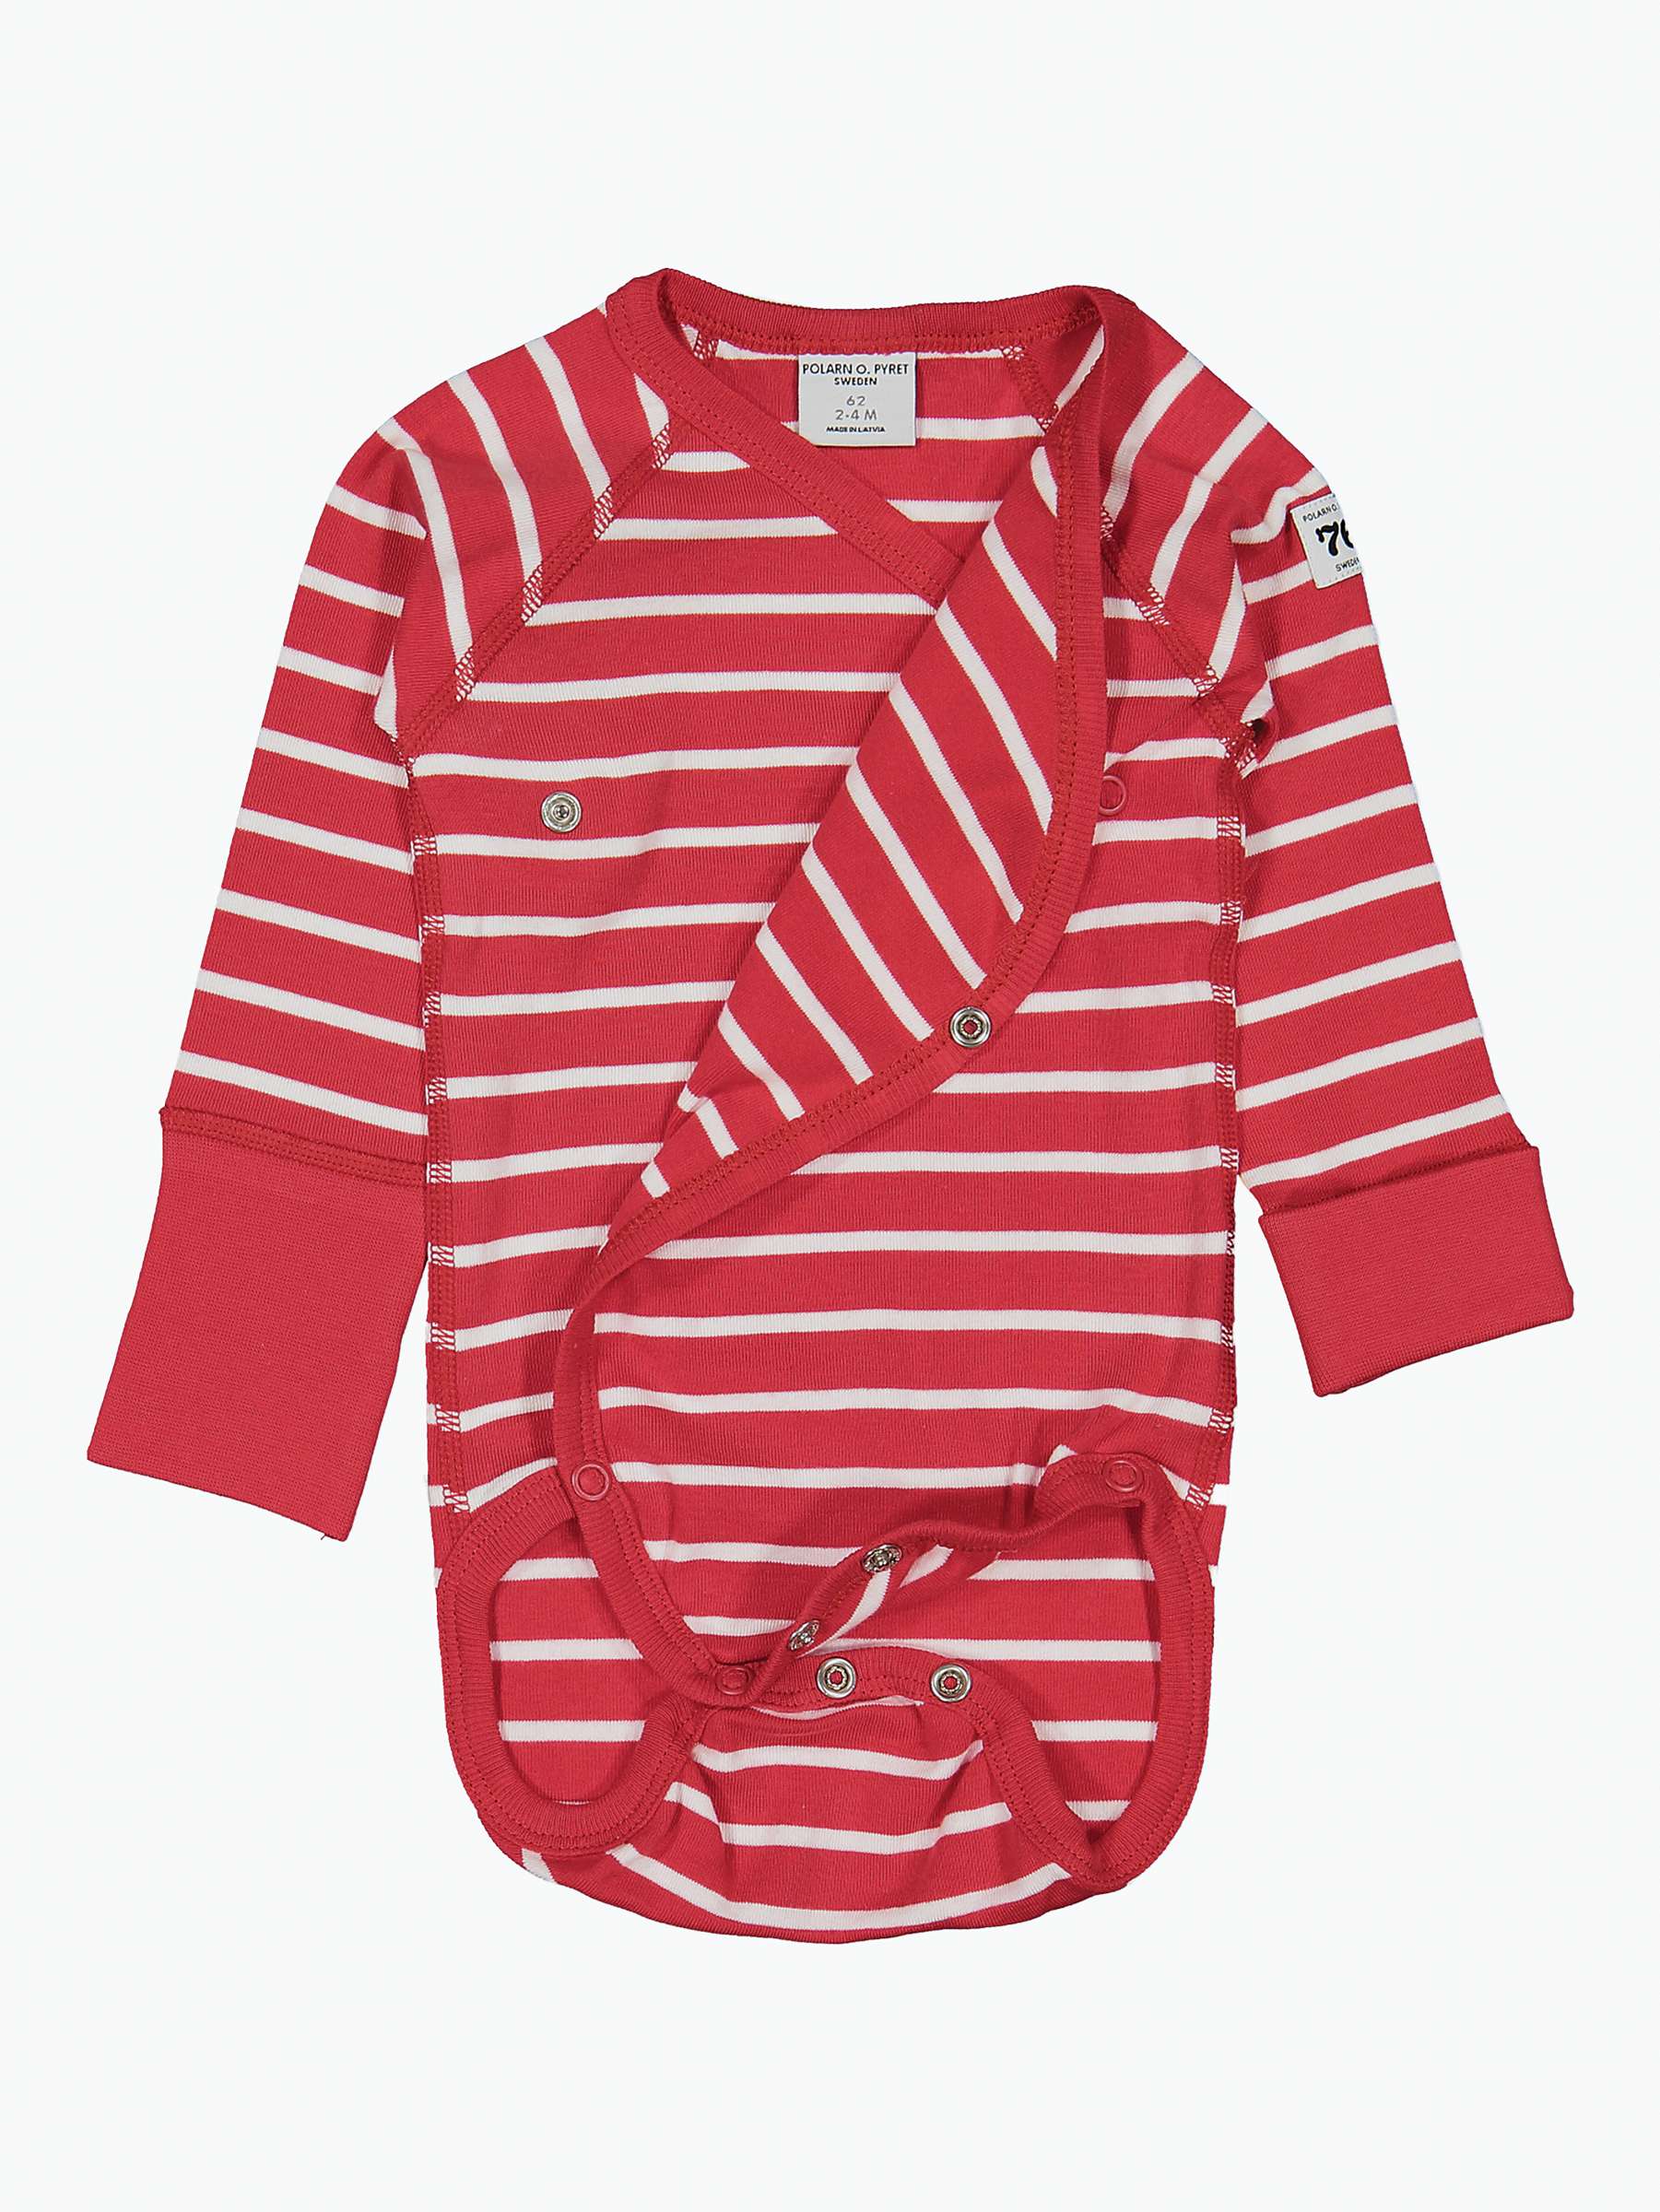 Buy Polarn O. Pyret Baby GOTS Organic Cotton Stripe Wraparound Bodysuit Online at johnlewis.com